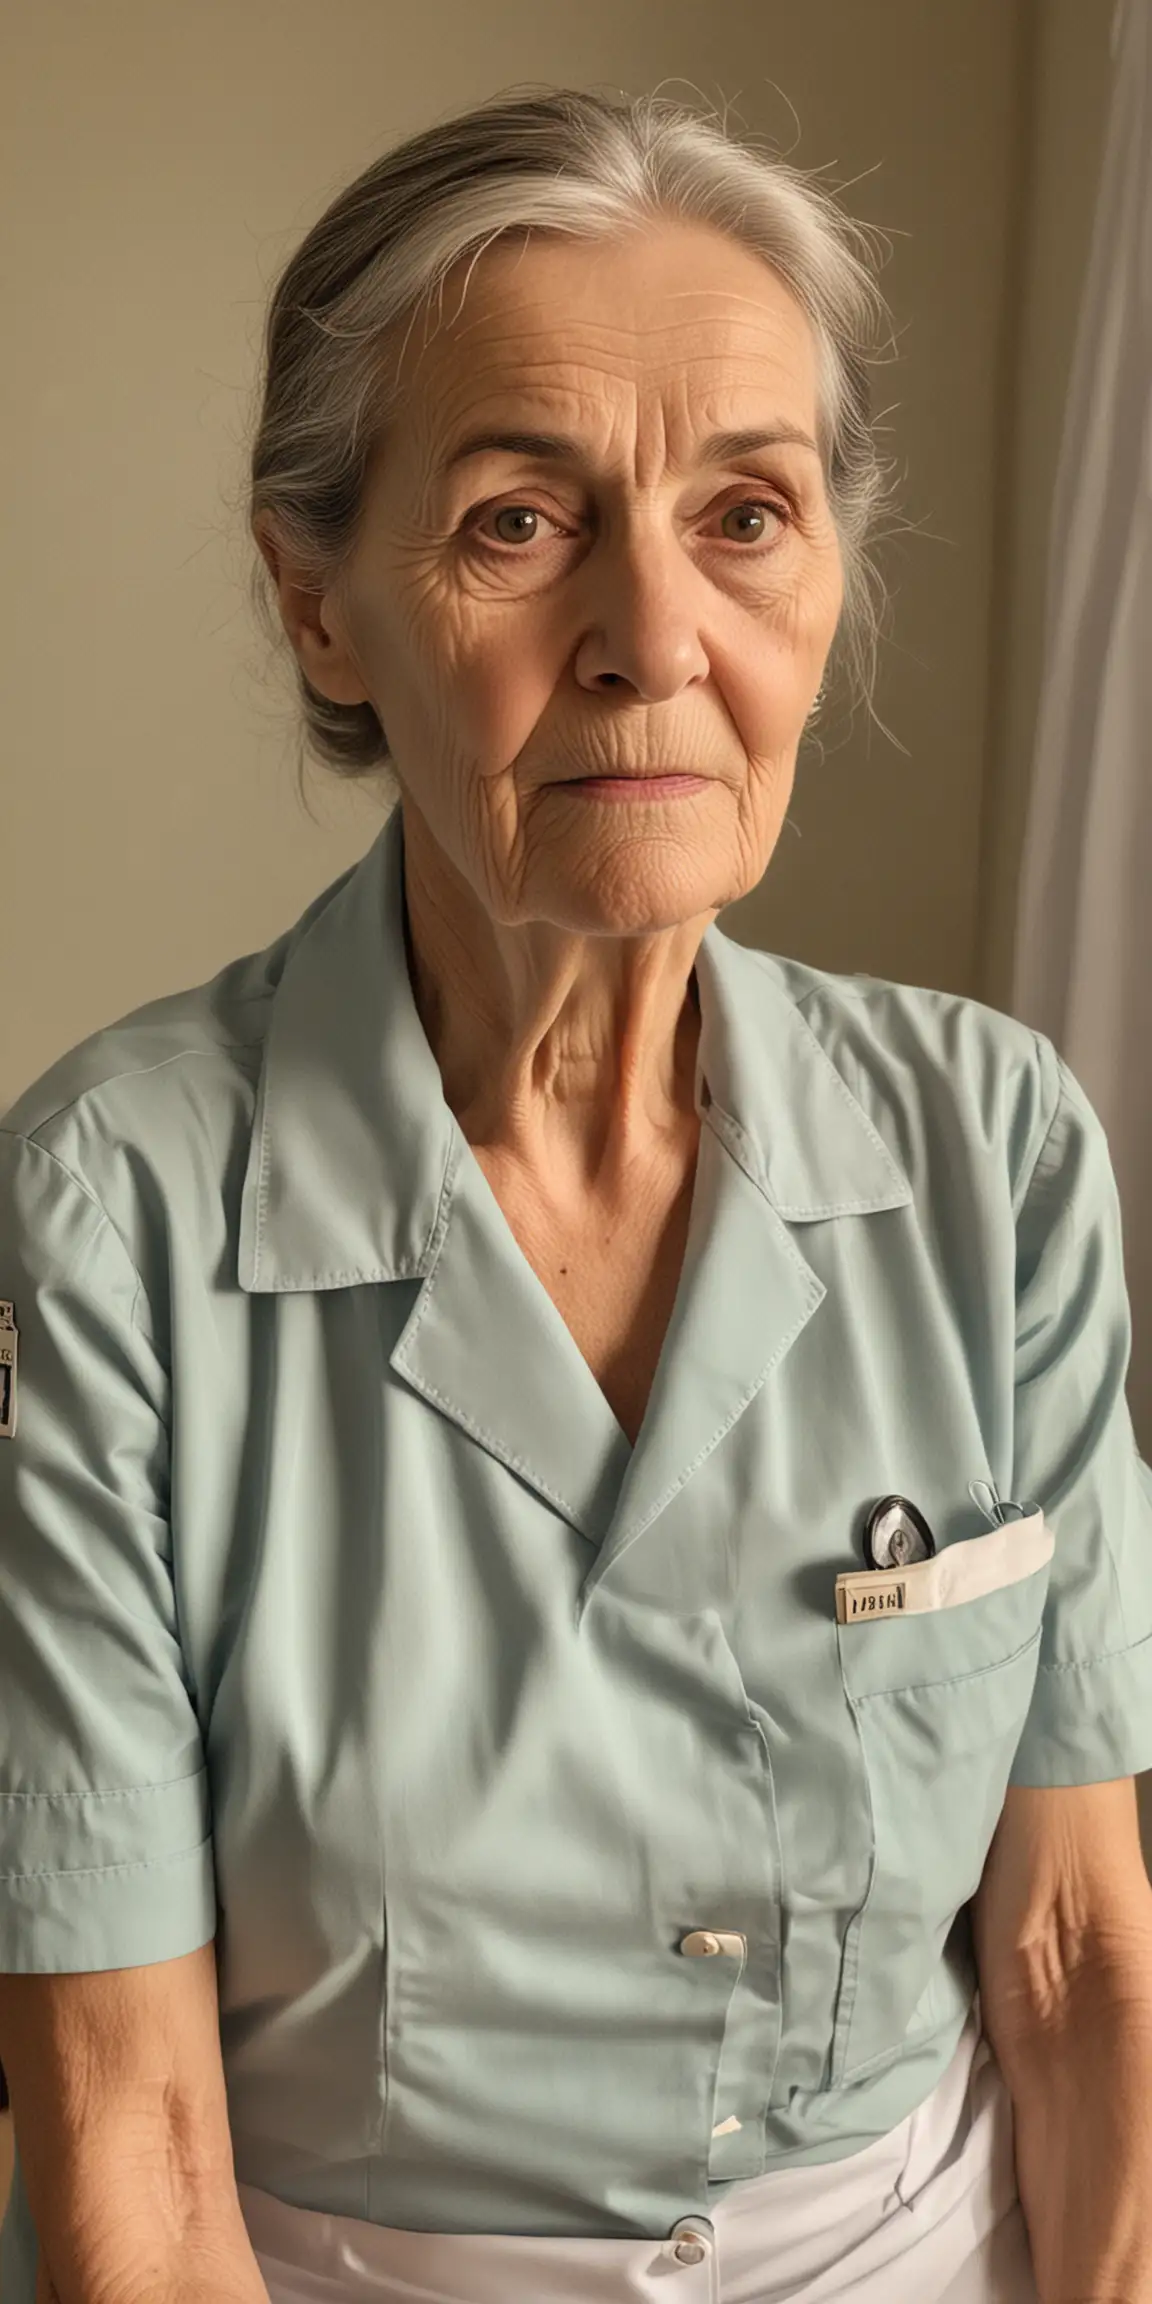 Elderly Nurse in Uniform Displaying Vulnerability